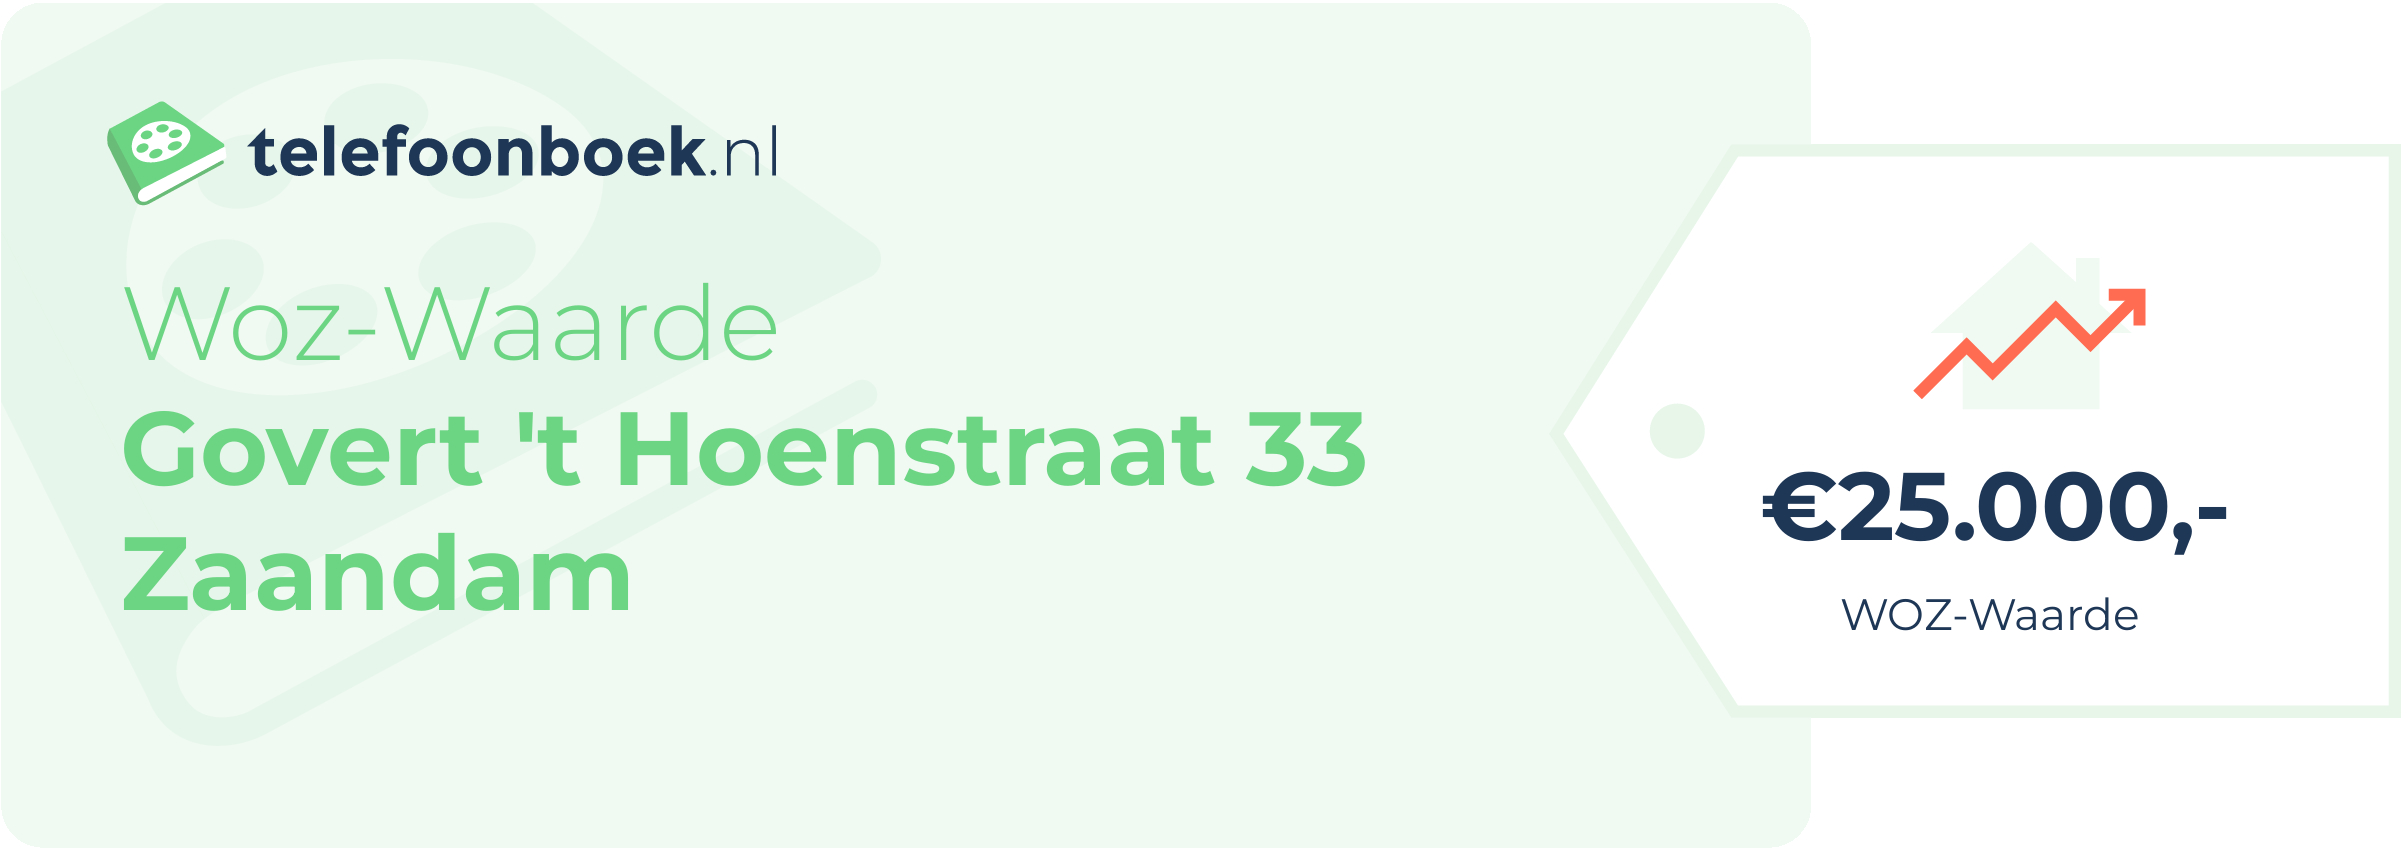 WOZ-waarde Govert 't Hoenstraat 33 Zaandam